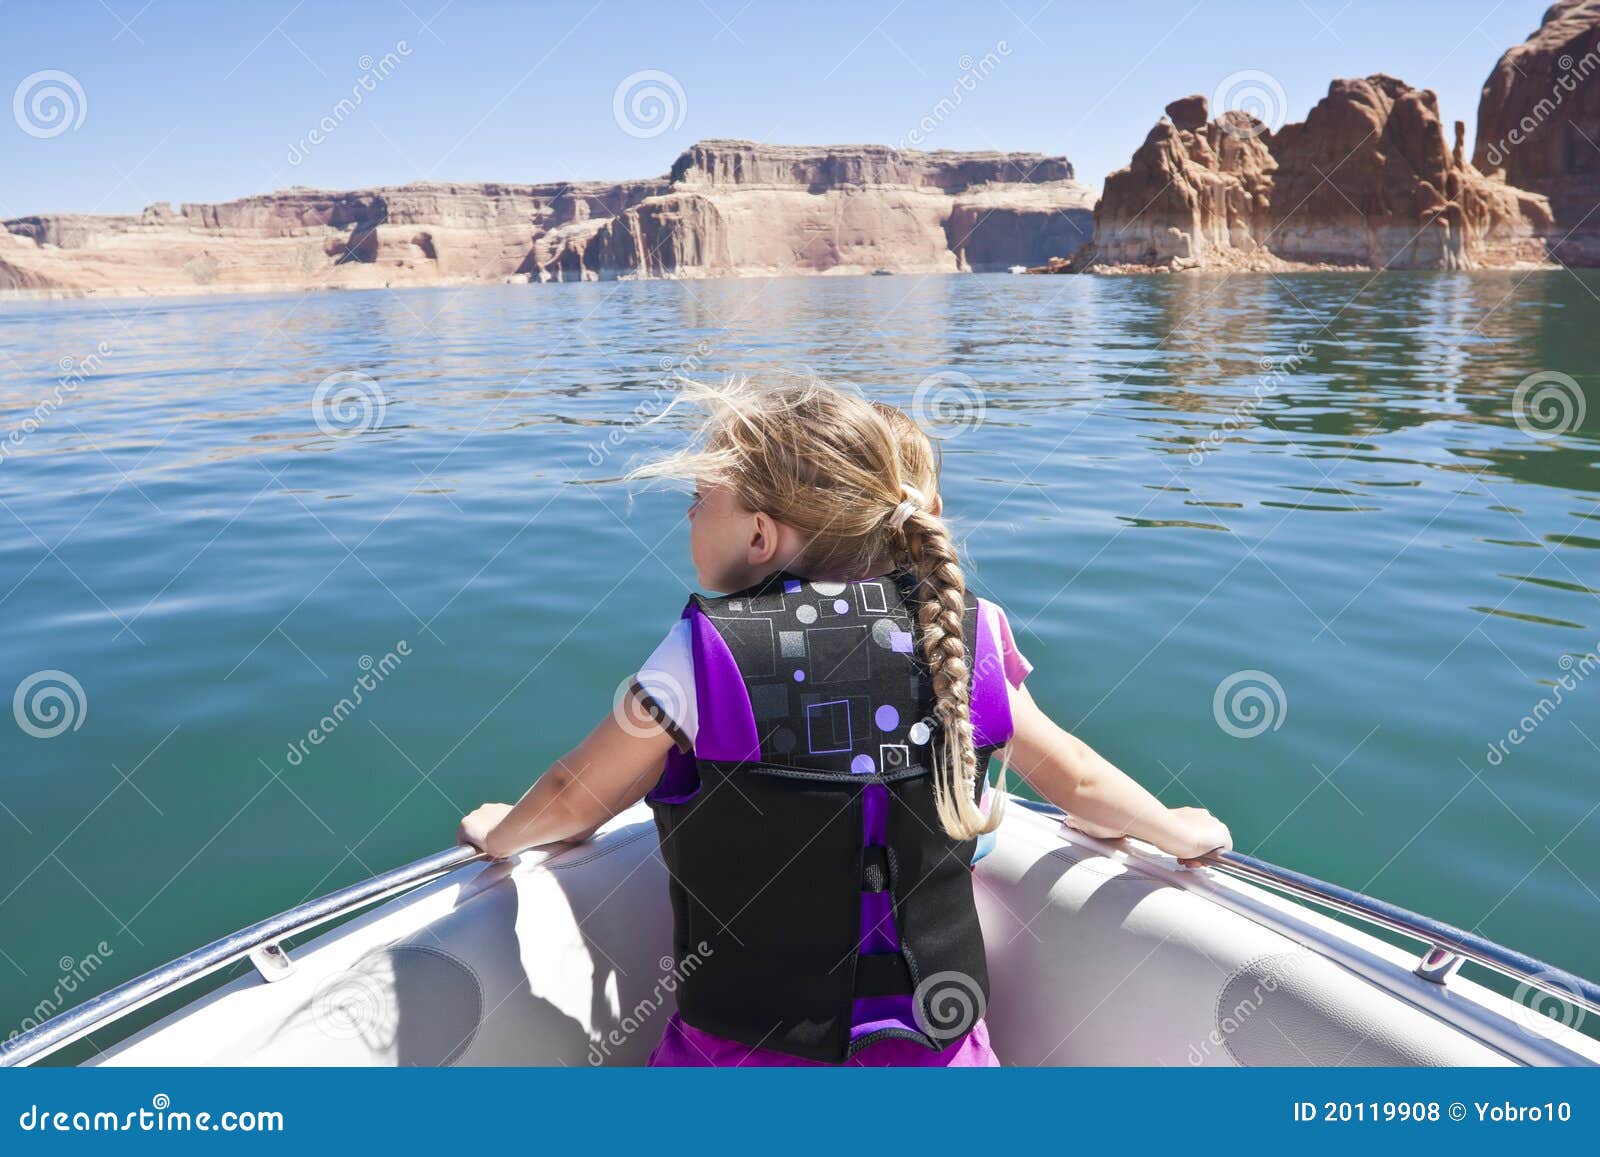 Girls On Boats Lake Powell